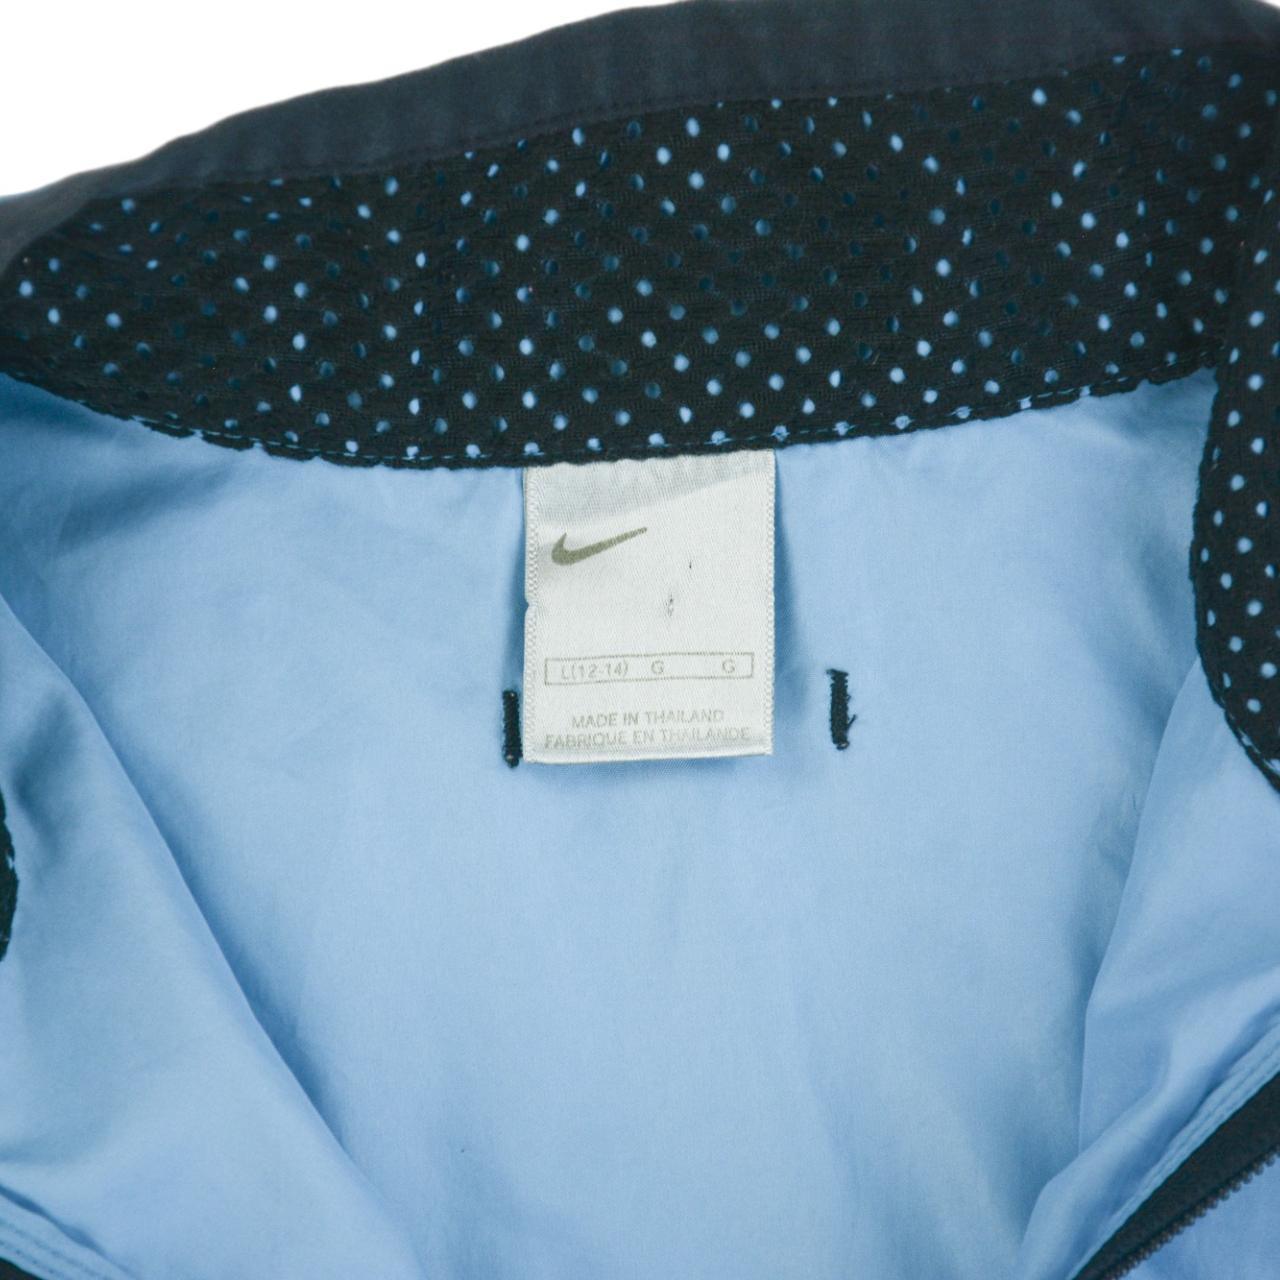 Vintage Nike Q Zip Jacket Size L - Known Source